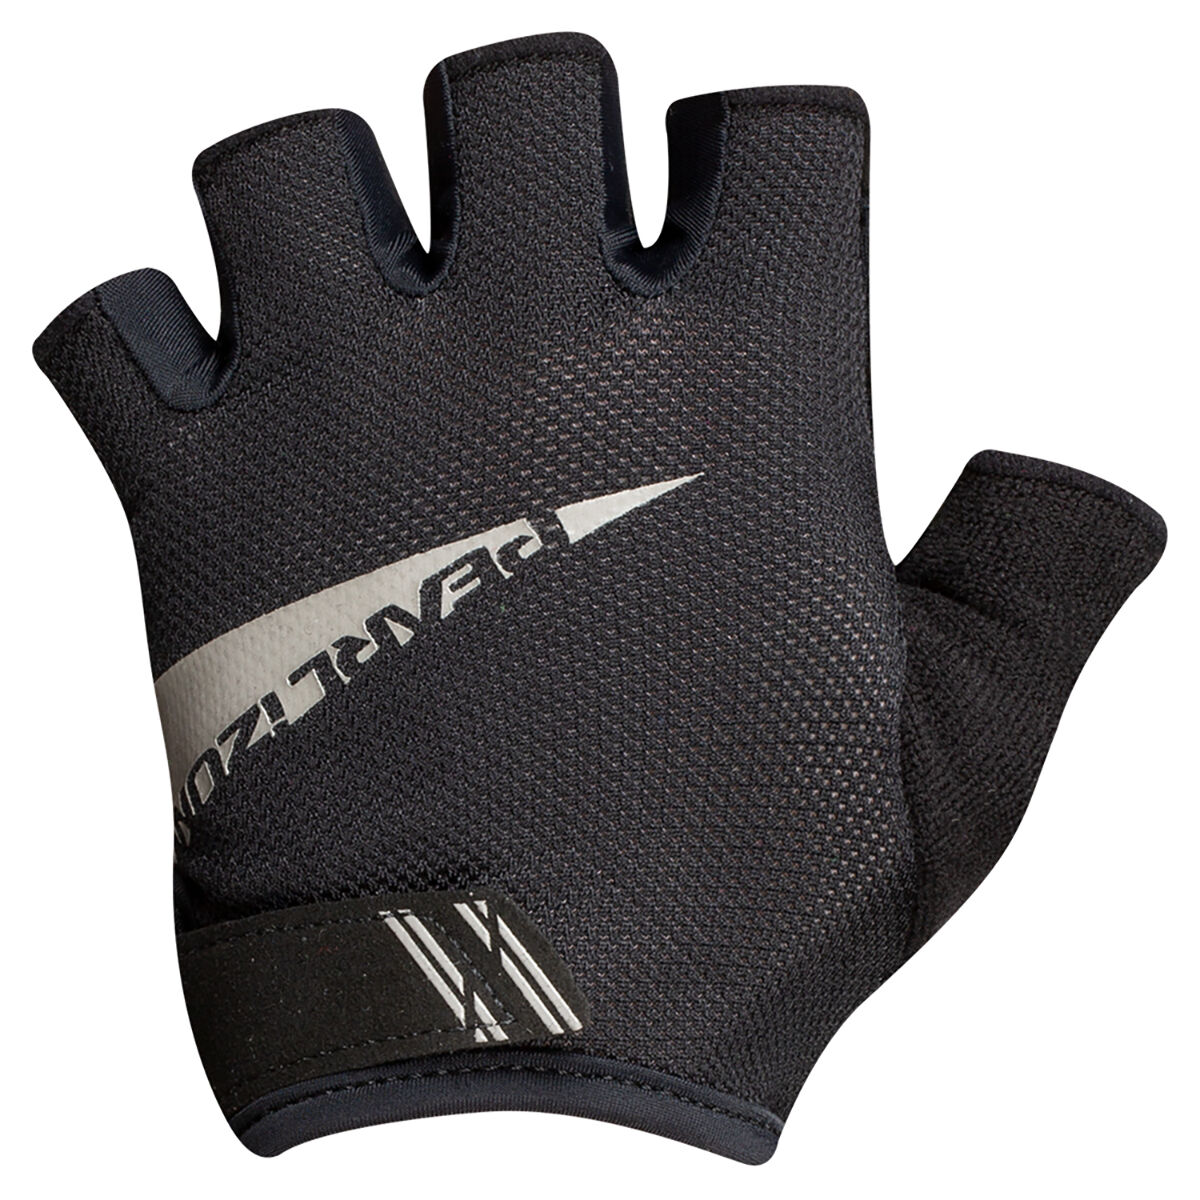 Pearl Izumi Select - Cycling gloves - Men's